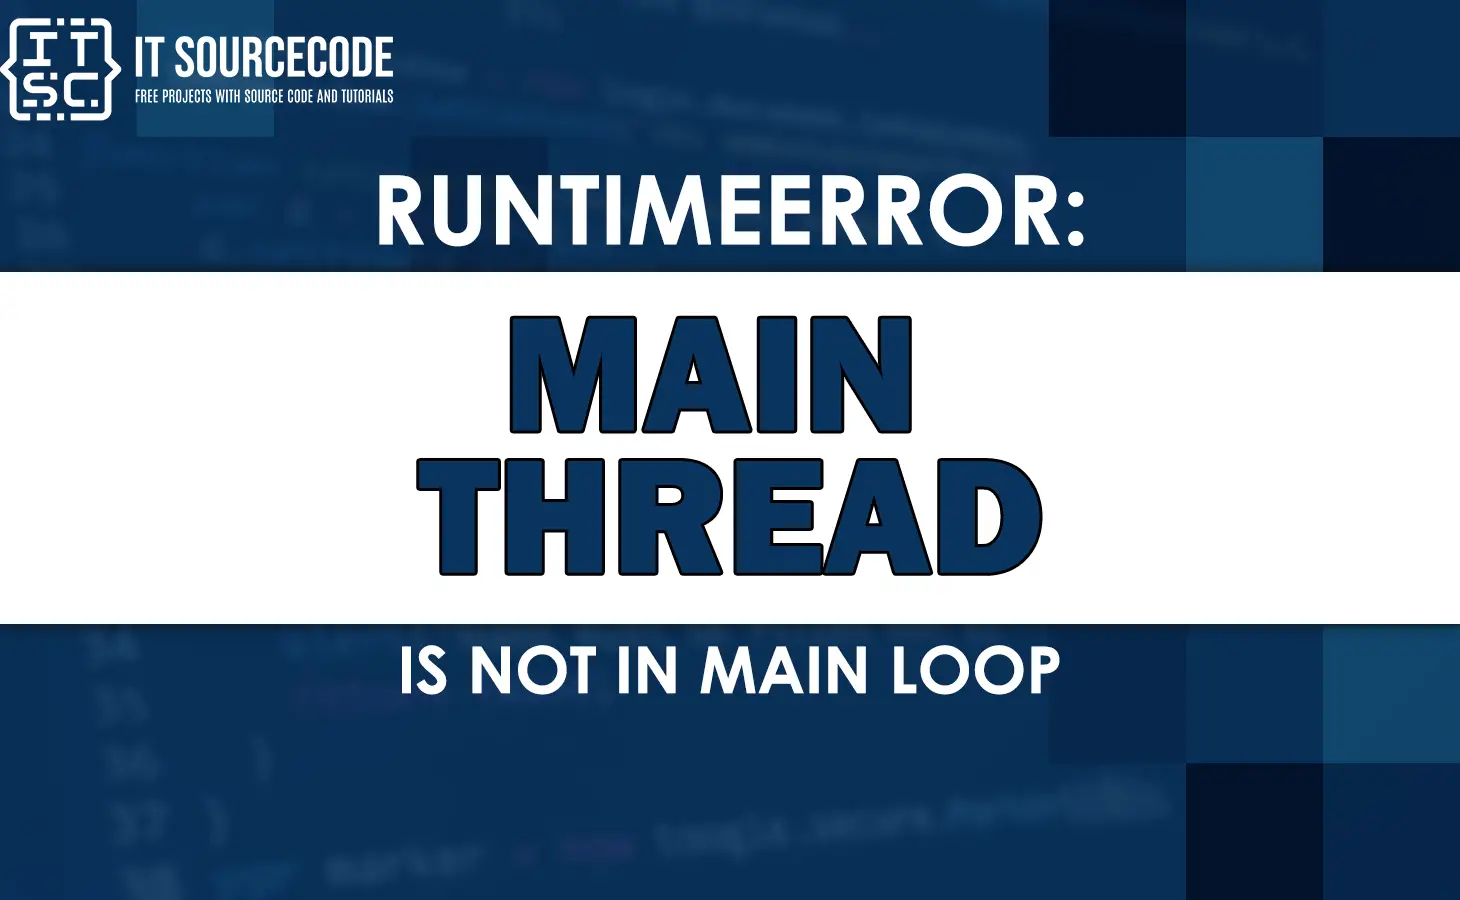 Runtimeerror main thread is not in main loop